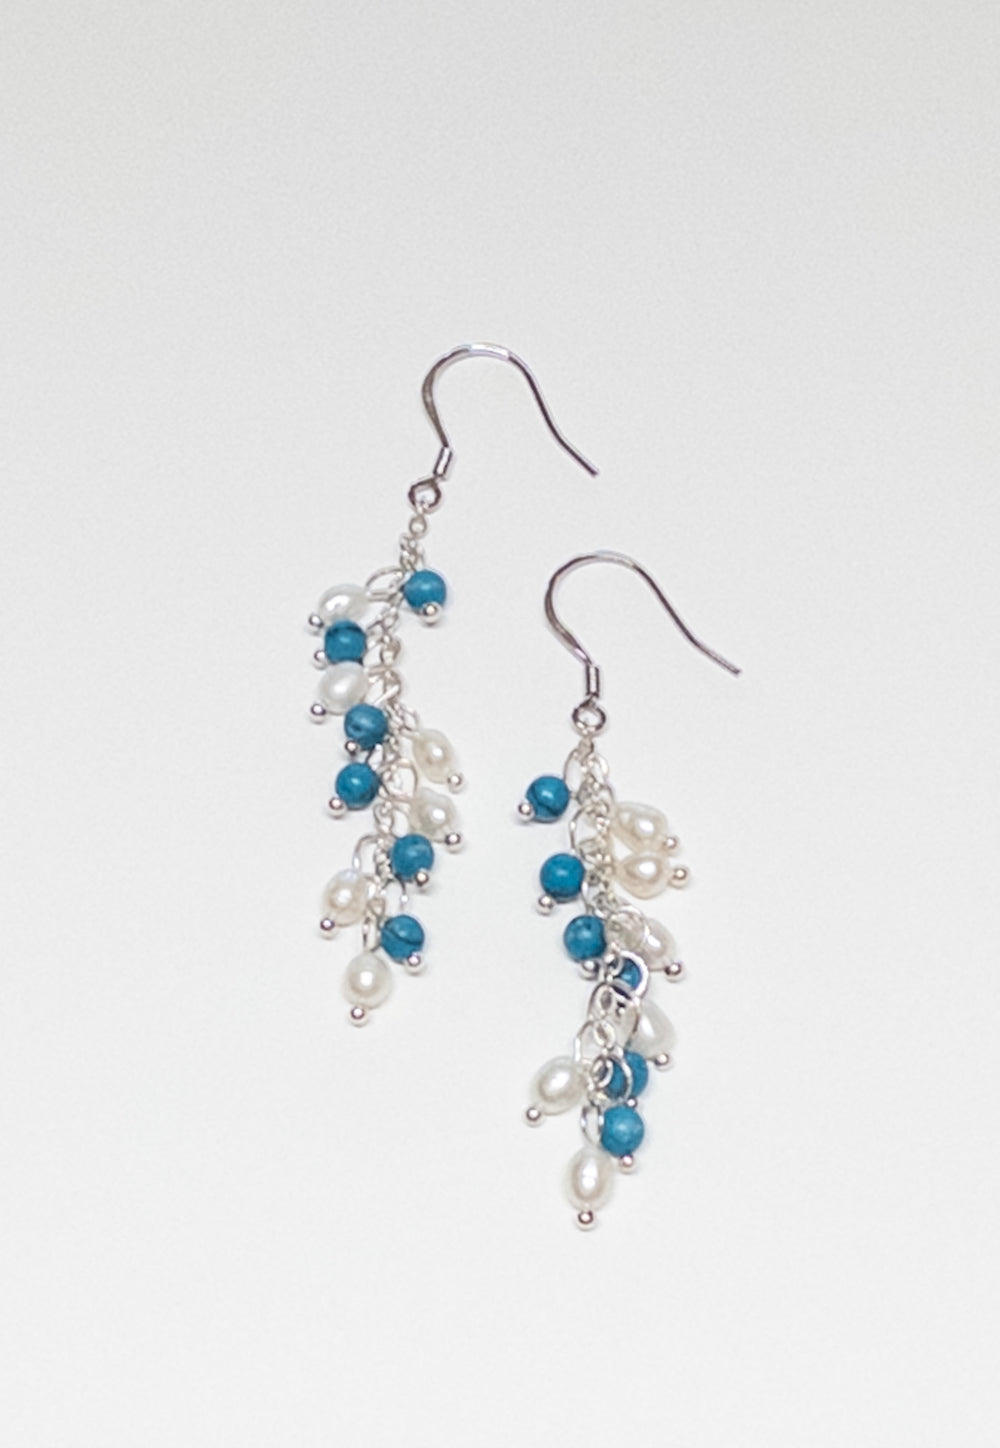 Teal and pearl cluster earrings